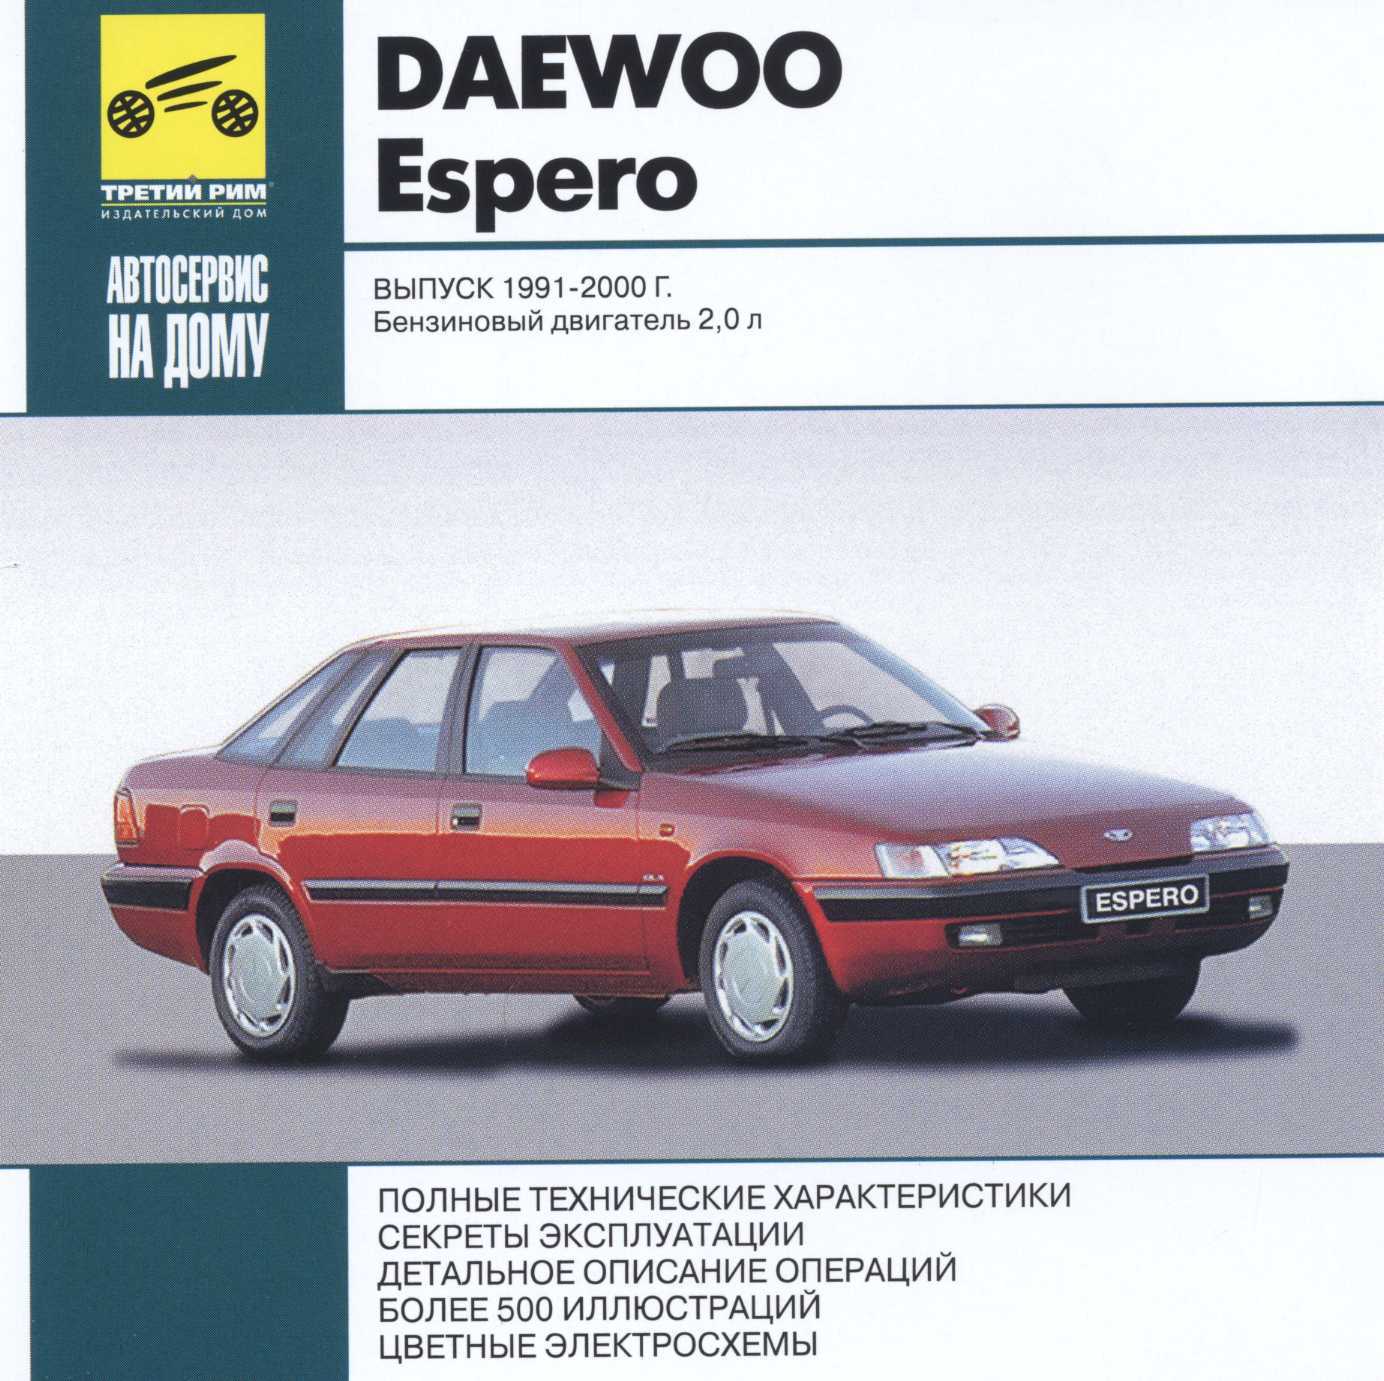 Daewoo espero 2.0 (klej) — комплект сцепления